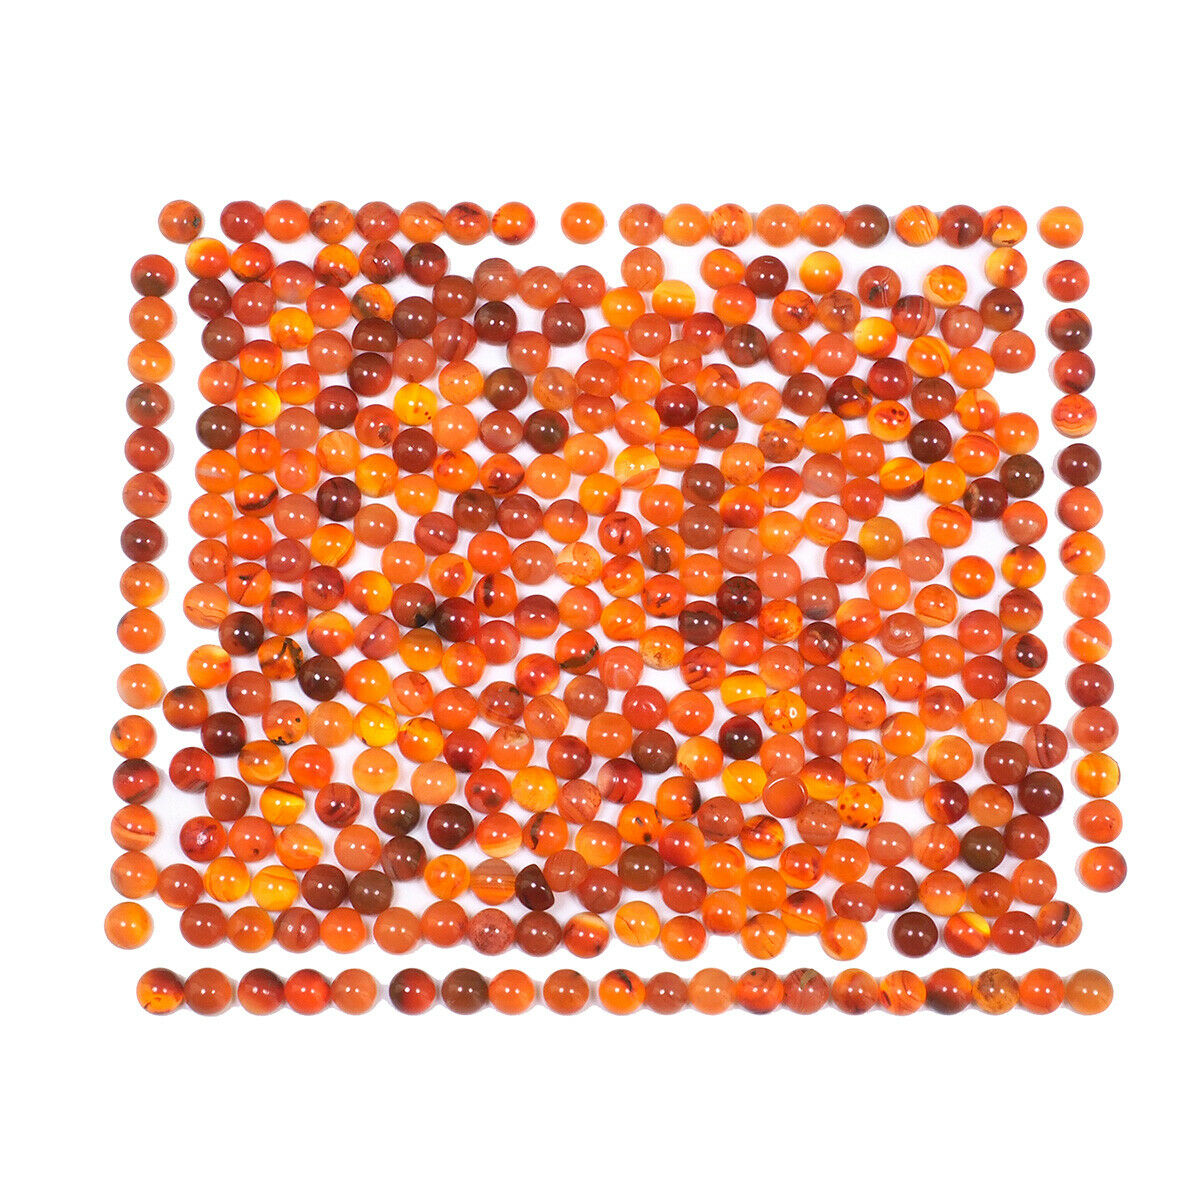 418 Pcs Natural Carnelian 4mm Round Beautiful Orange Loose Cabochon Gemstones